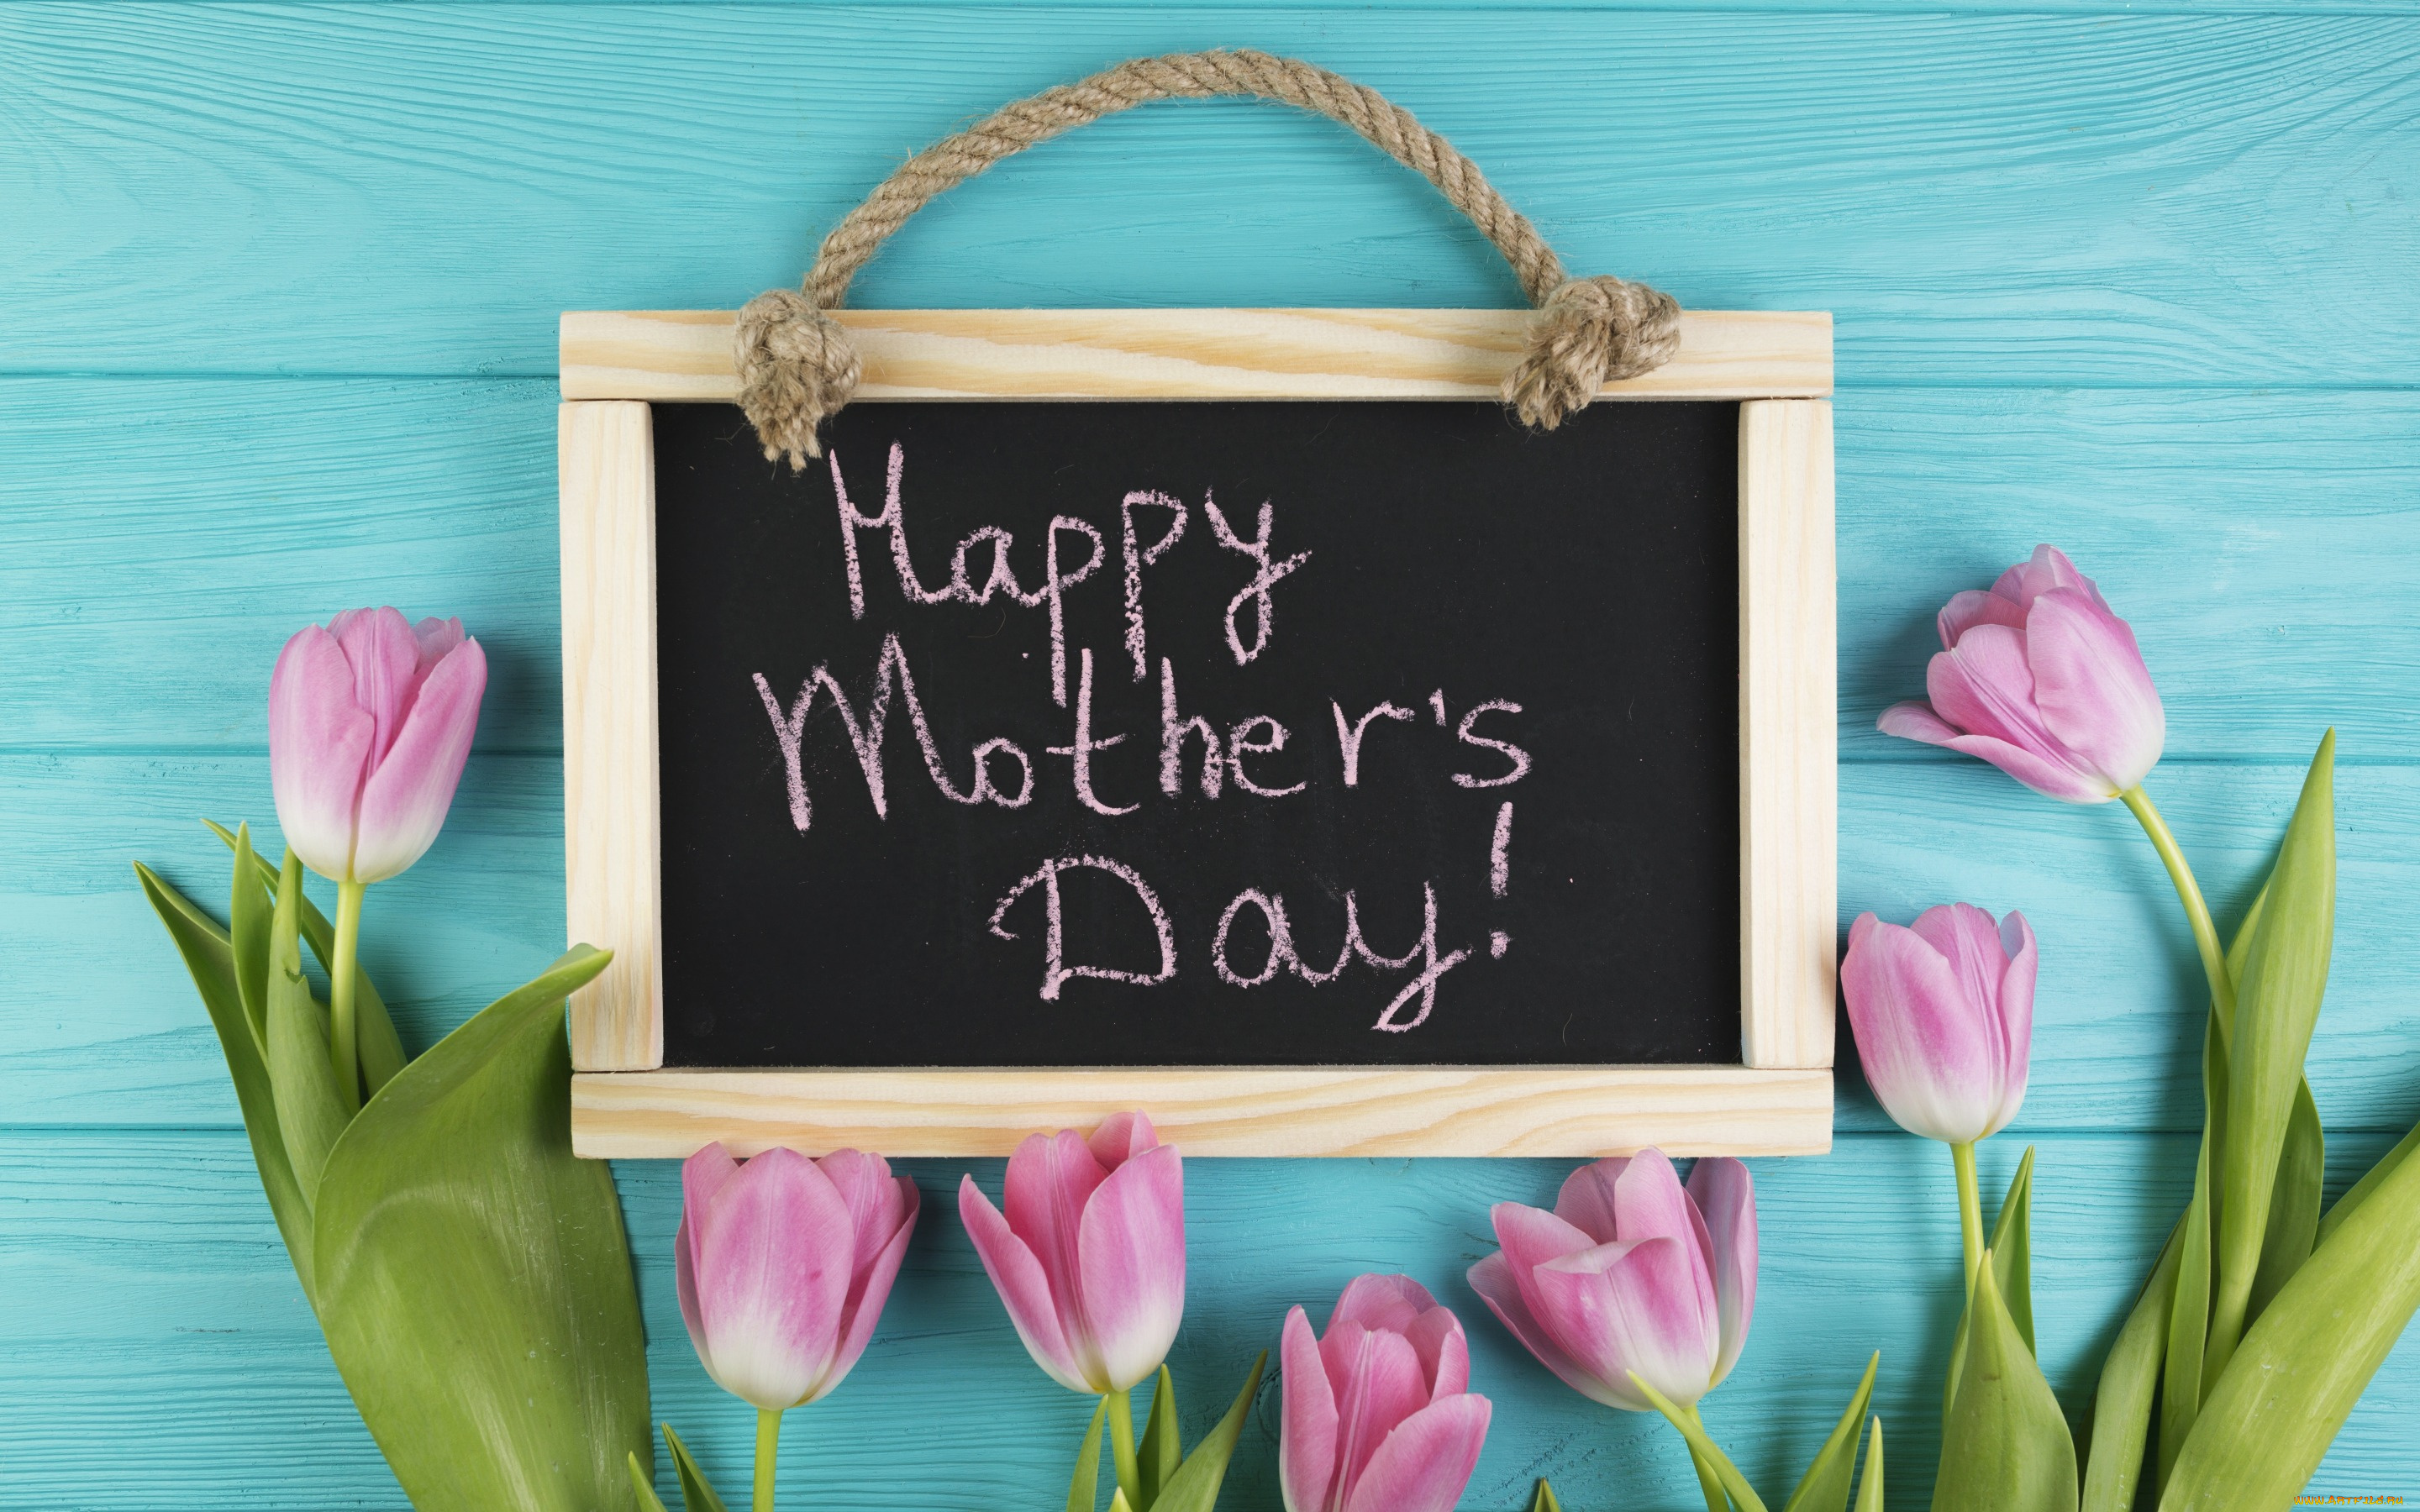 праздничные, день, матери, gift, тюльпаны, tulips, pink, wood, fresh, розовые, mother's, day, цветы, flowers, spring, доска, подарок, tender